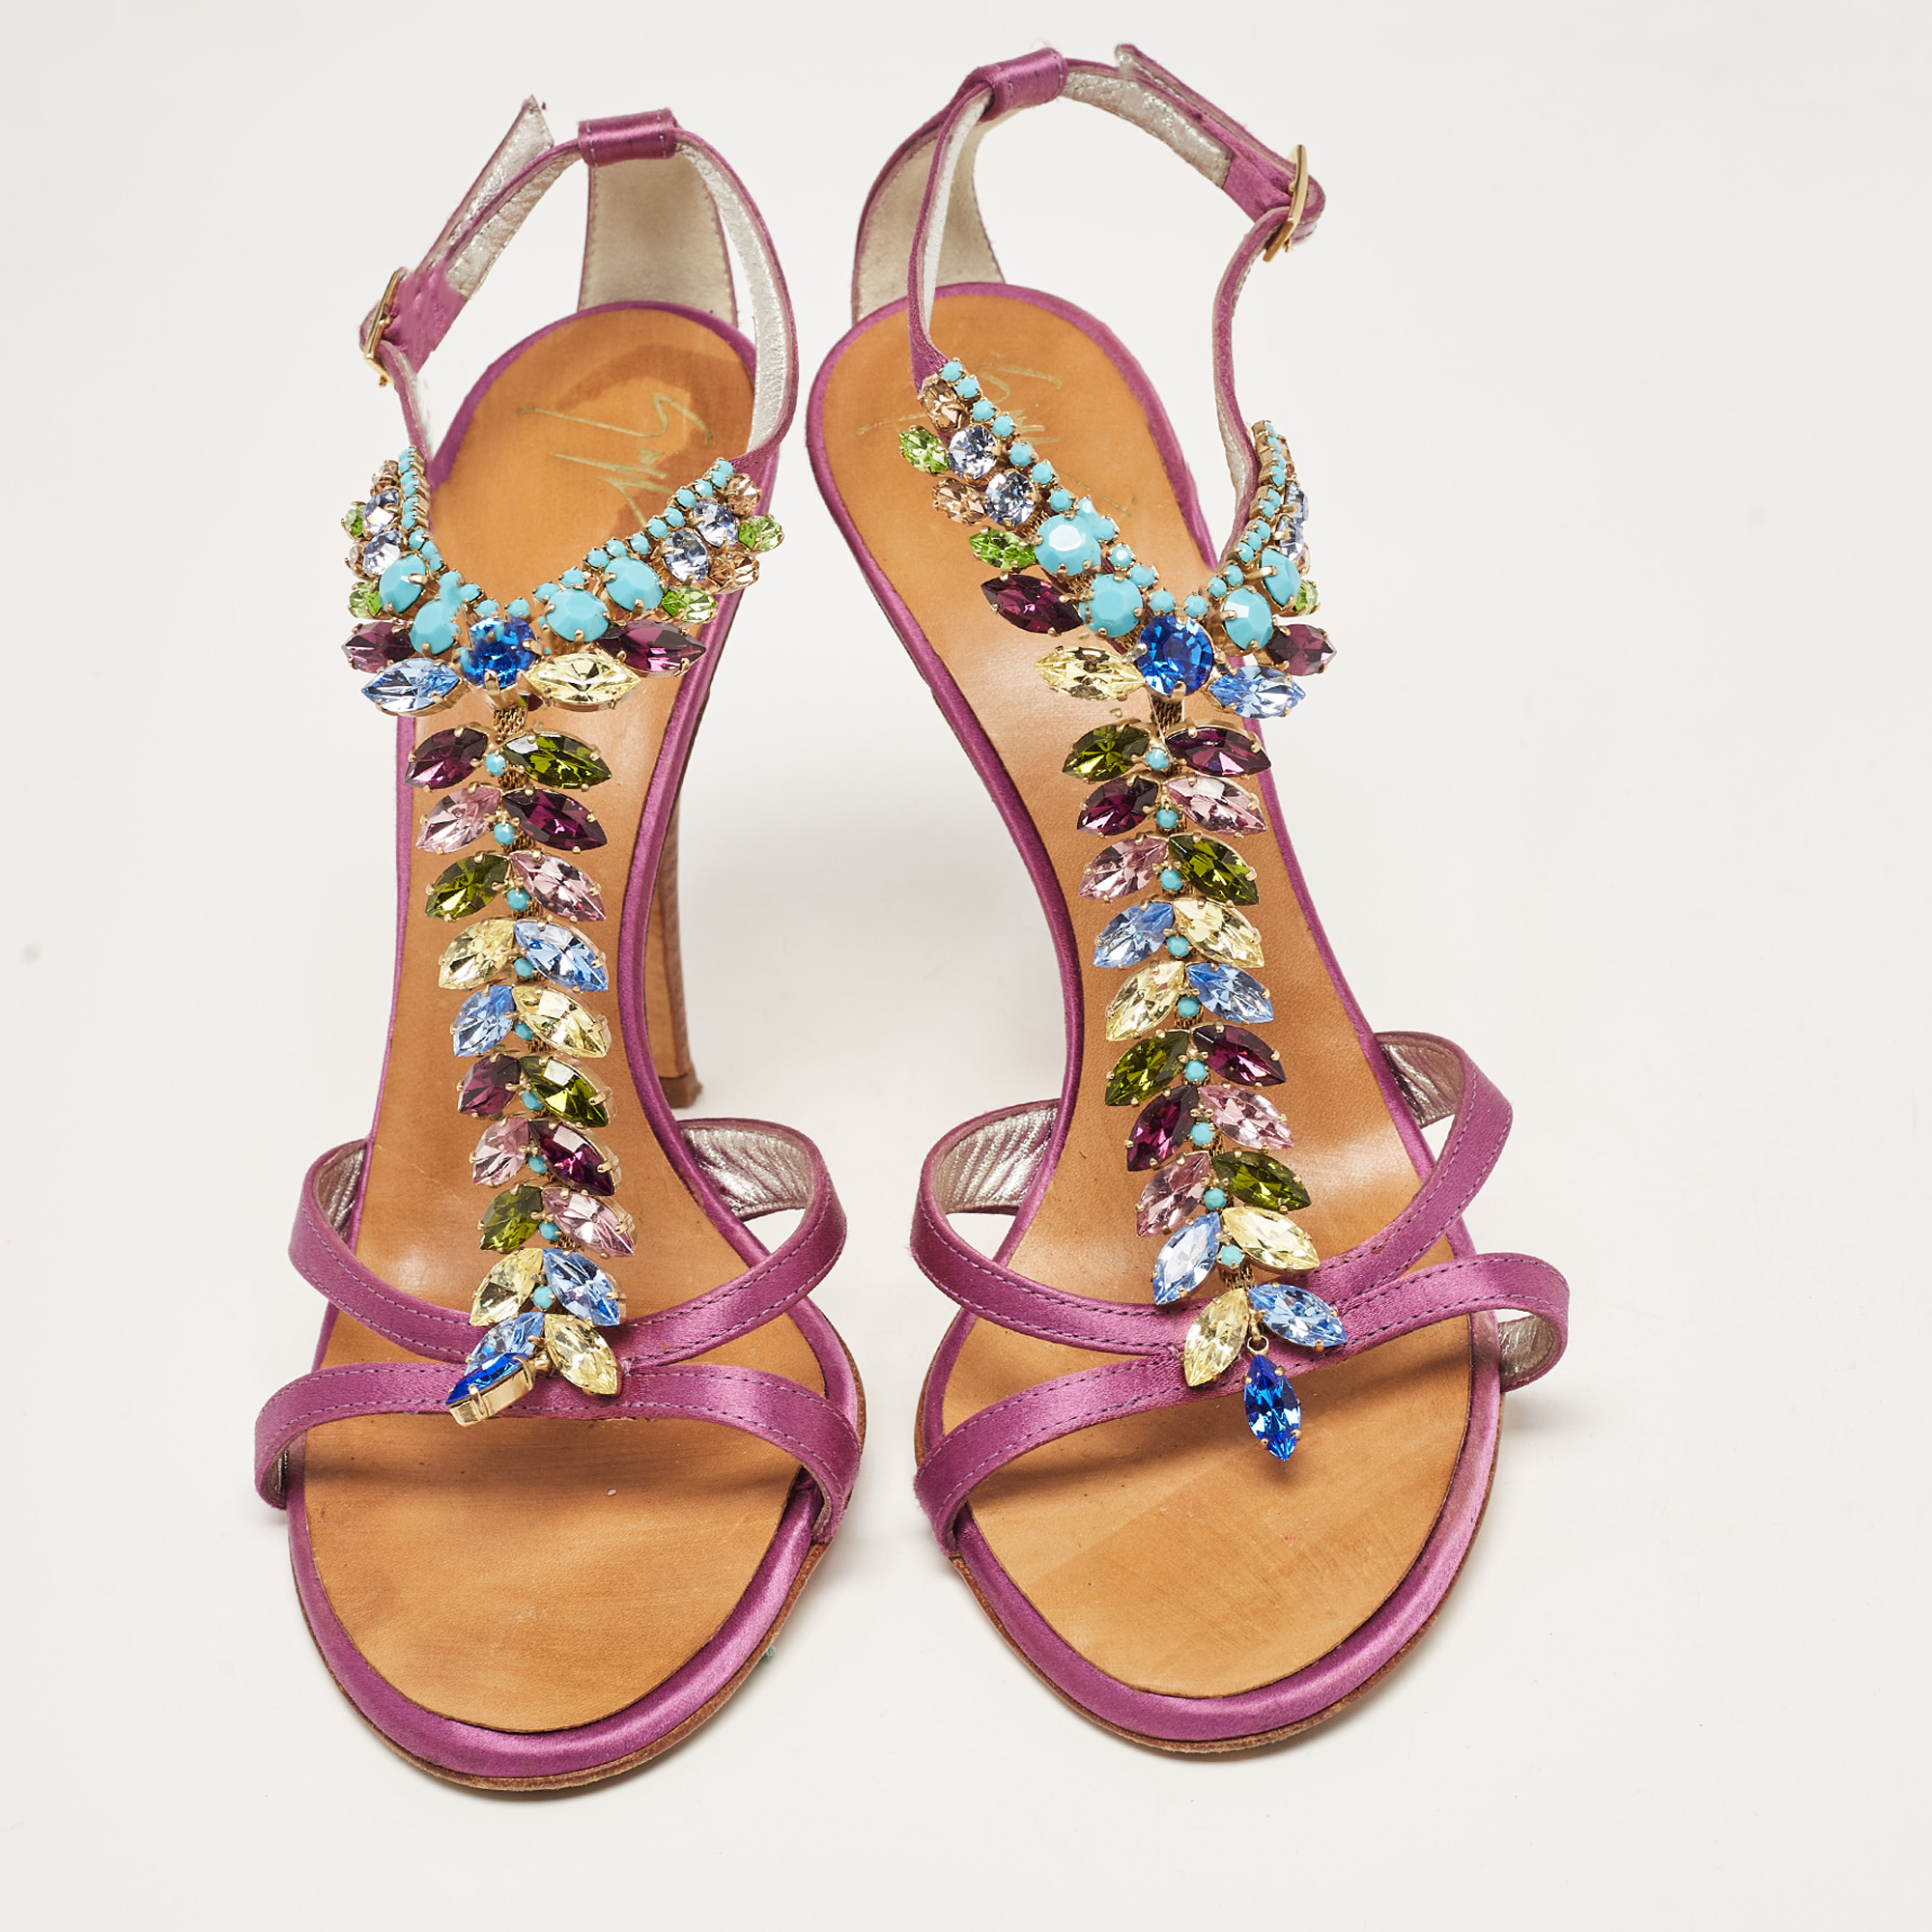 Giuseppe Zanotti Purple Satin Crystal Embellished T-Bar Ankle Strap Sandals Size 38.5